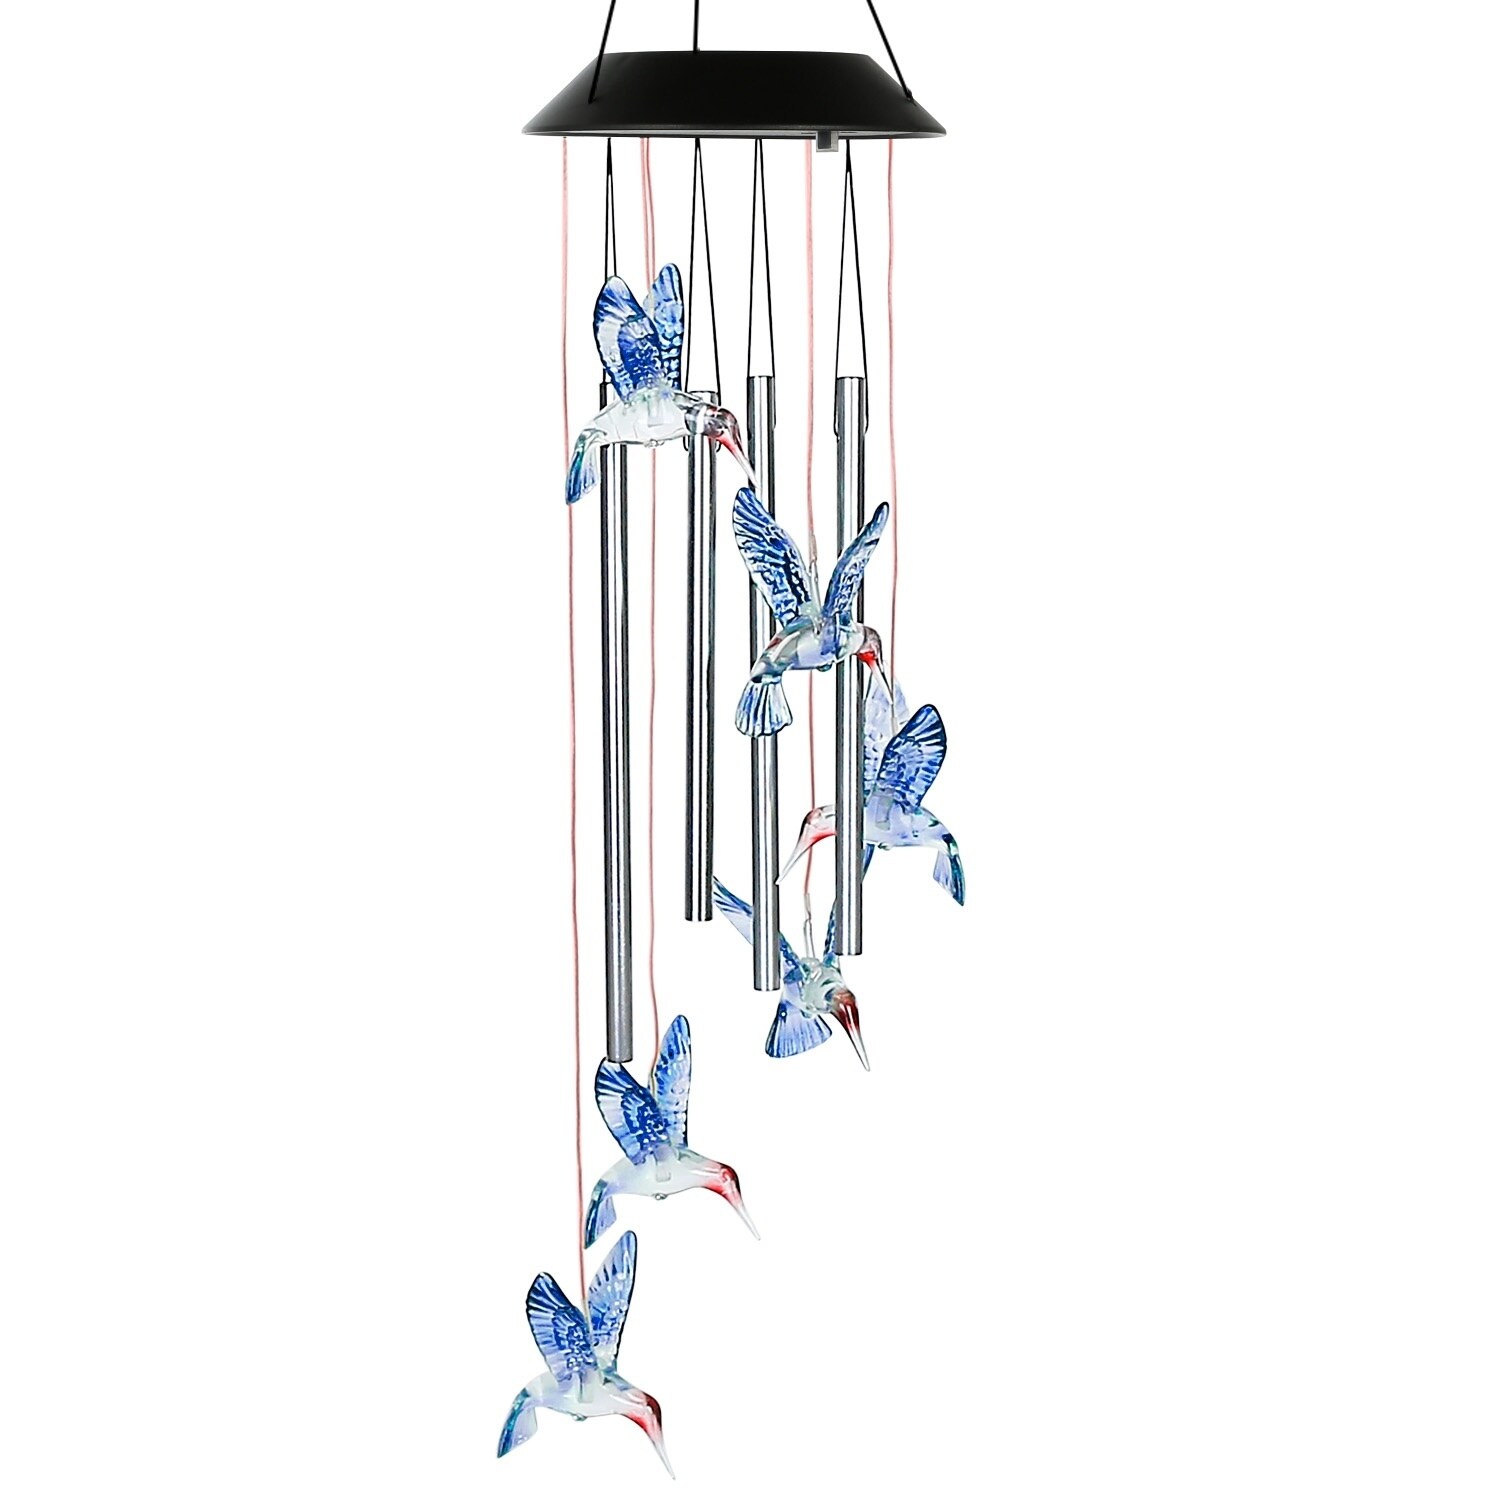 AHIOU HOME 29.5-in Blue Metal Hummingbird Wind Chime at